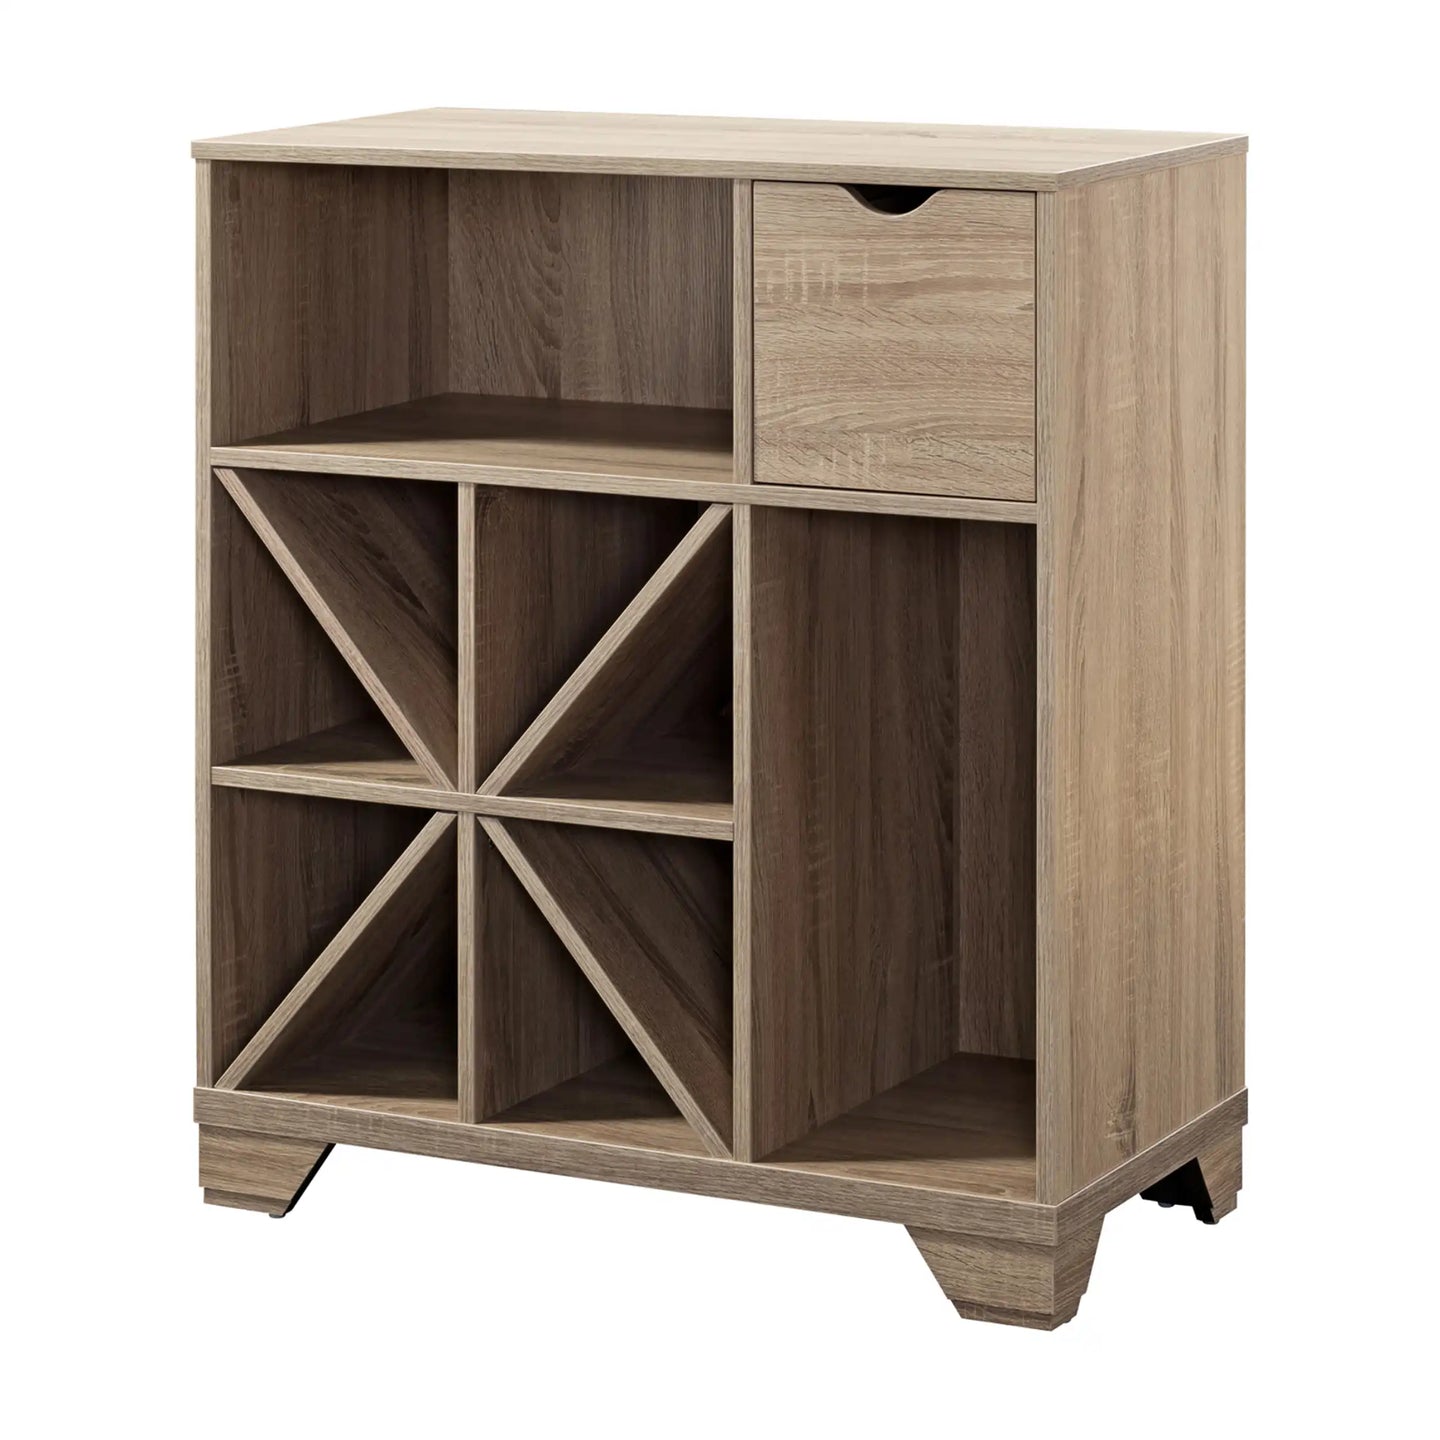 Furniture of America Gregos Modern Multi-Storage Buffet - IDI-182279